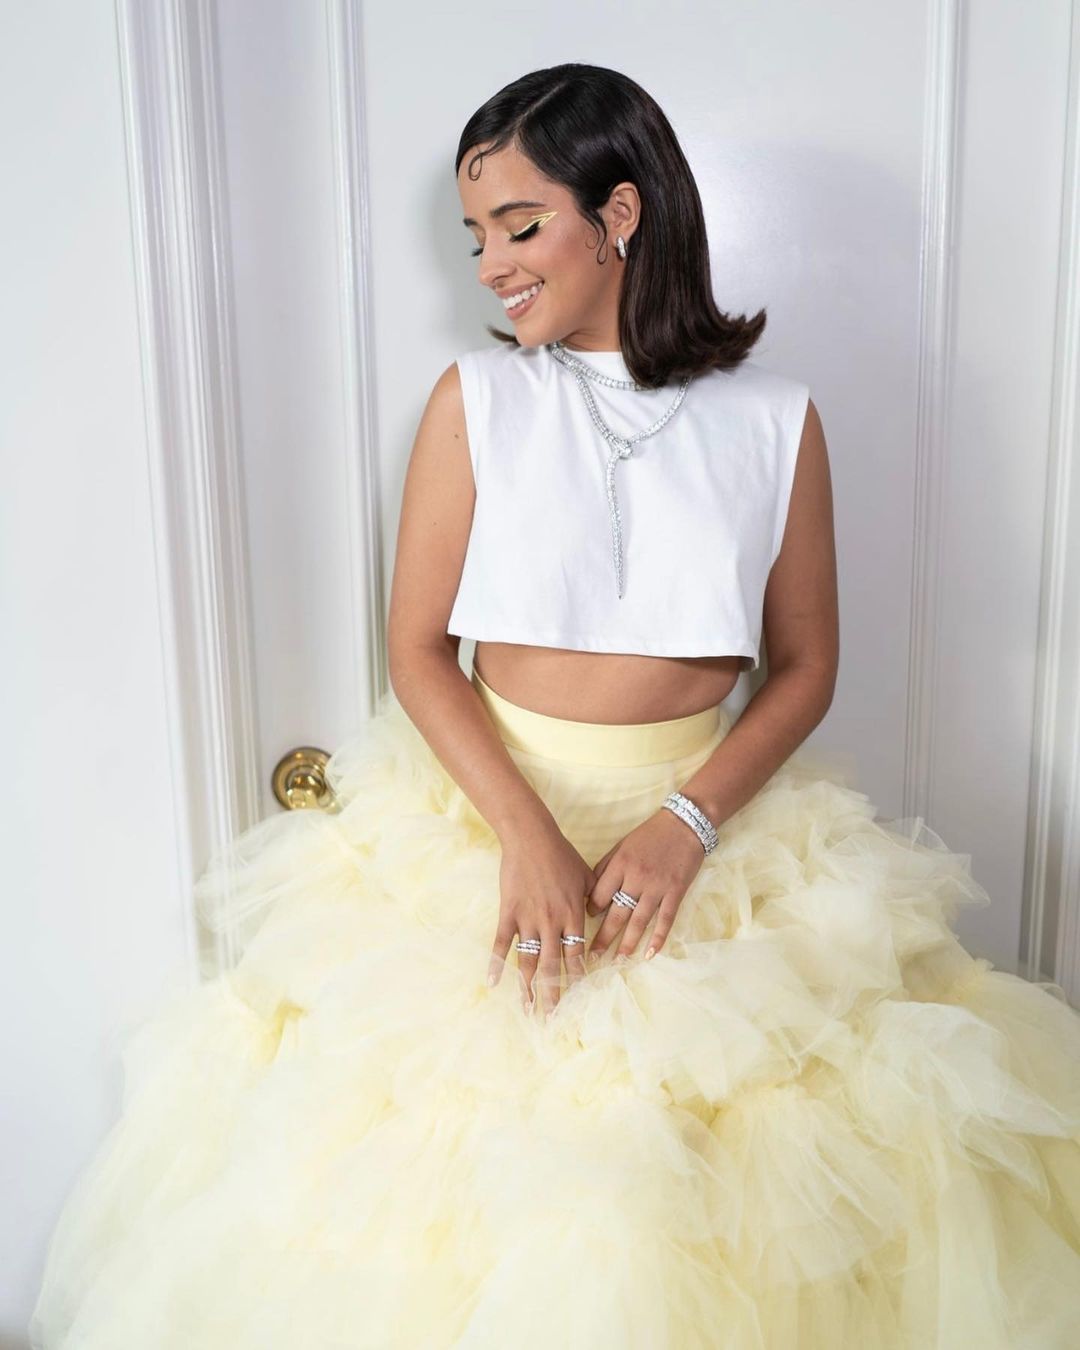 Photos n°29 : Camila Cabello Rocks A Pearl Bra at The Grammy Awards!